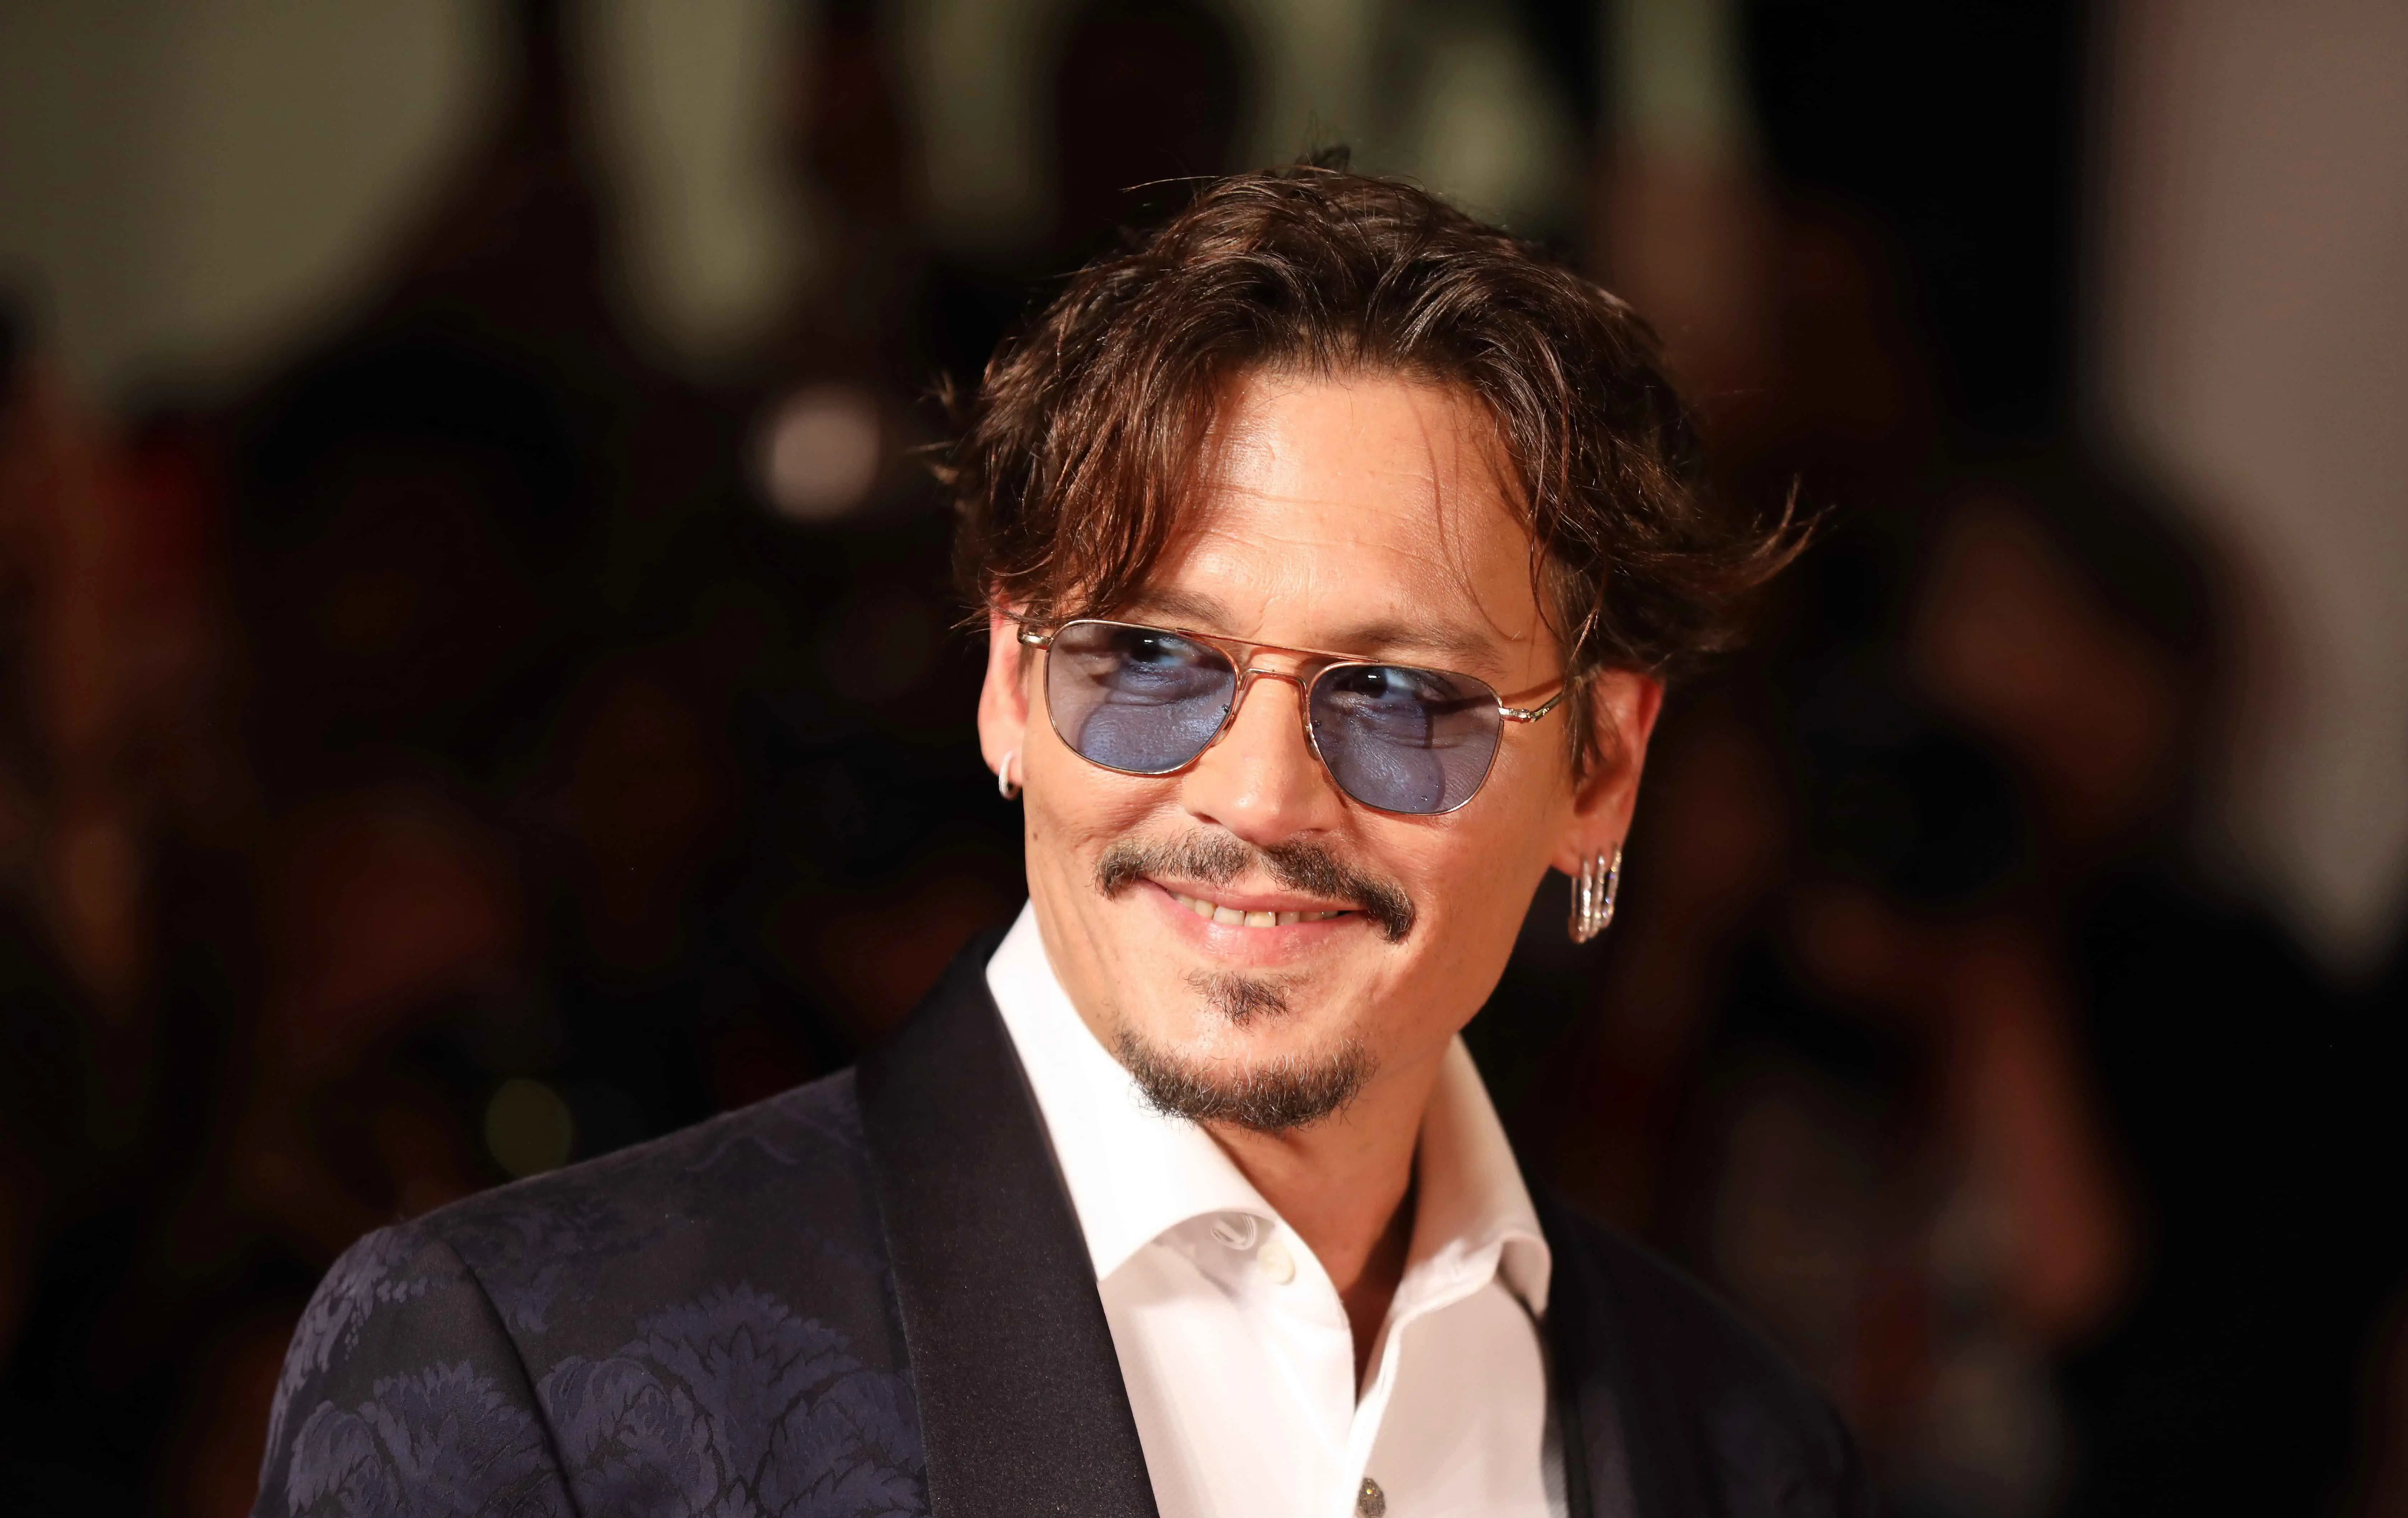 “Johnny Depp’s Landmark Dior Fragrance Endorsement Deal: An Inside Look”